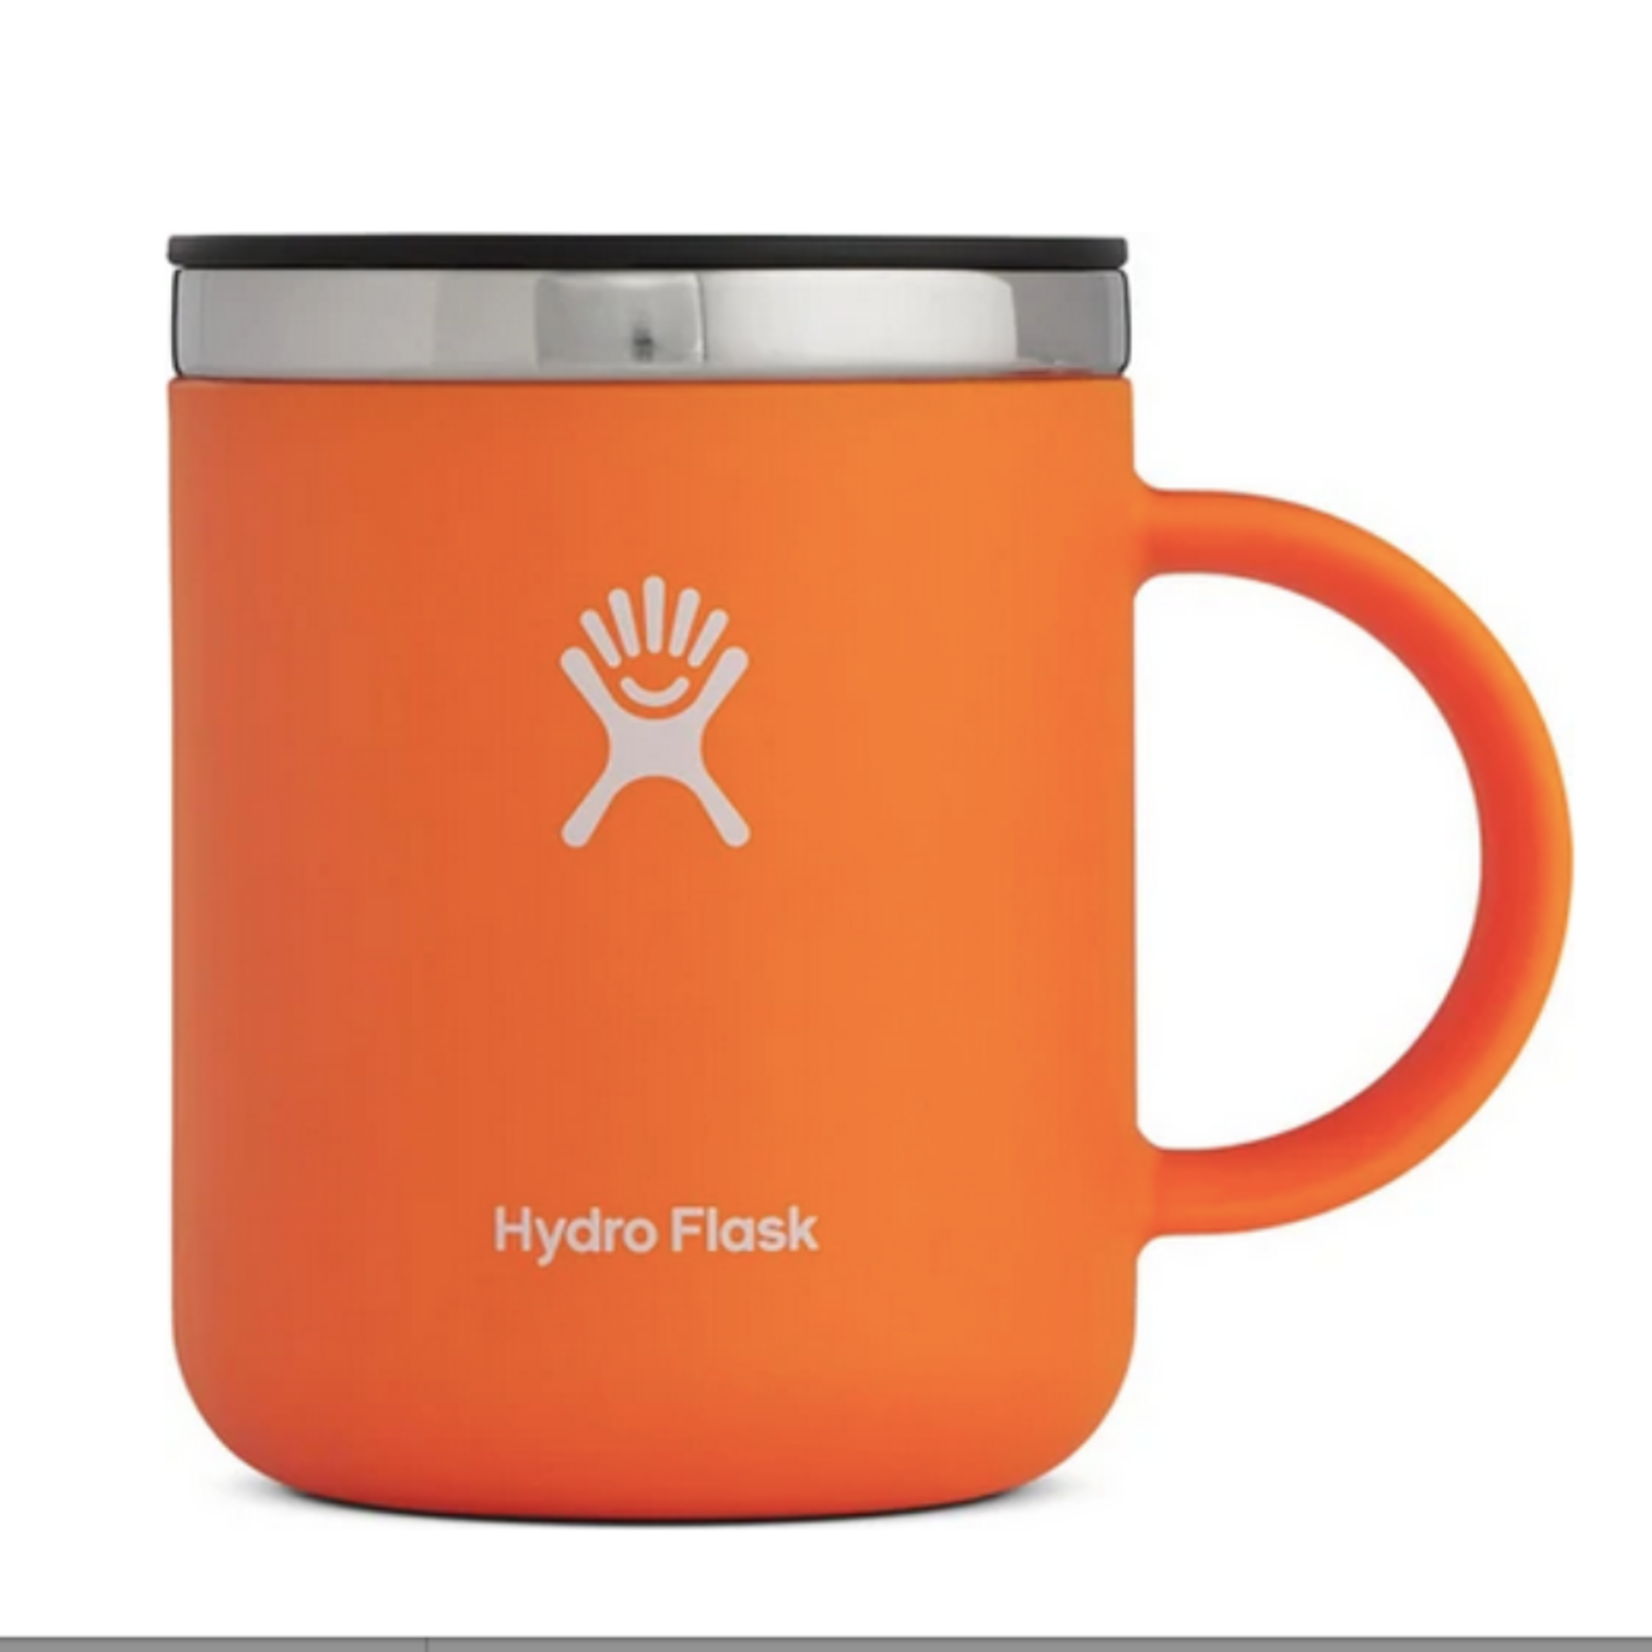 Hydro Flask Hydro Flask 12oz Tumbler Coffee Mug.